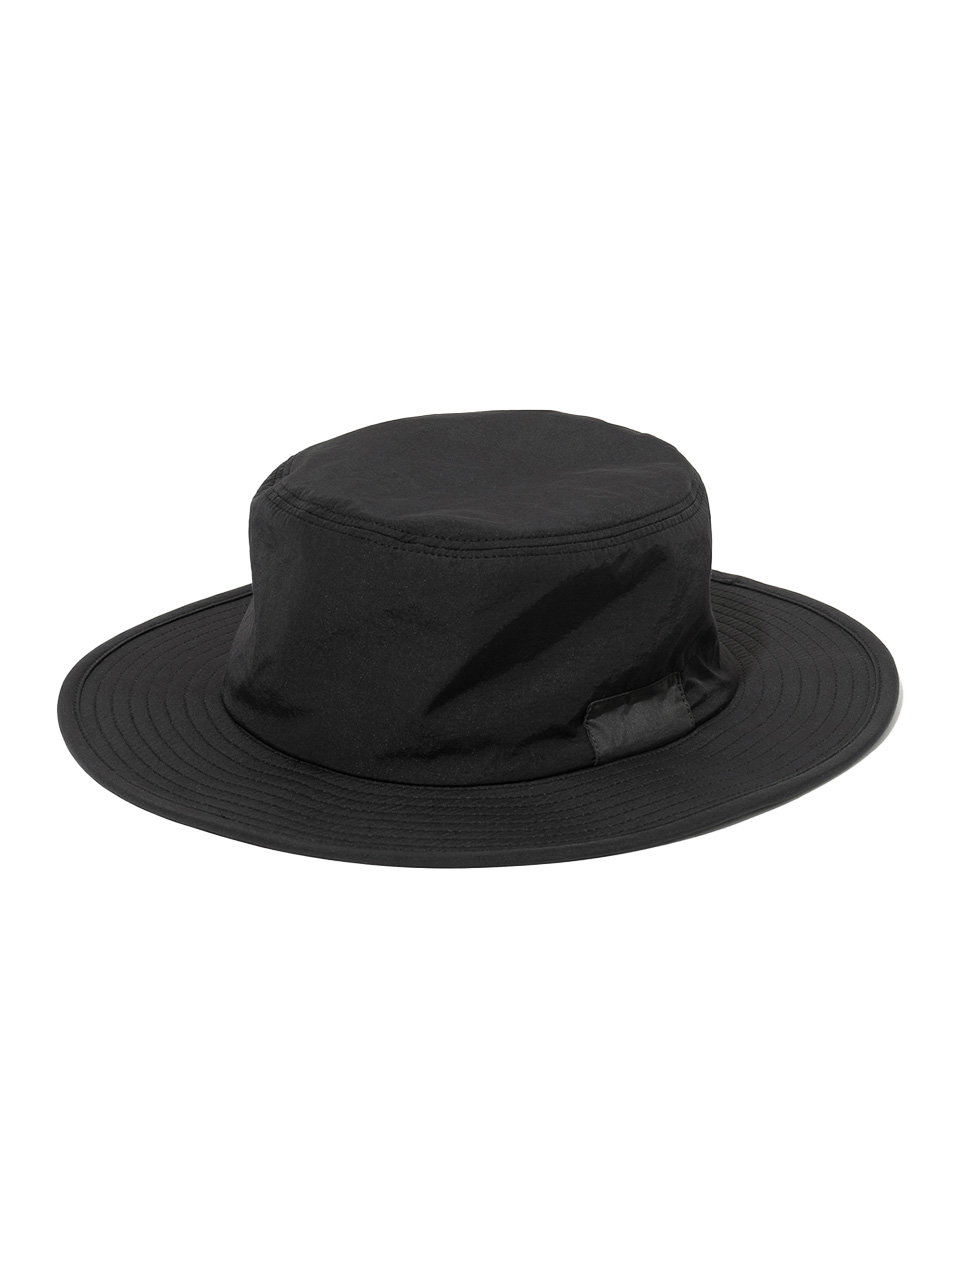 SHIRTER - NYLON PANAMA HAT (BLACK)